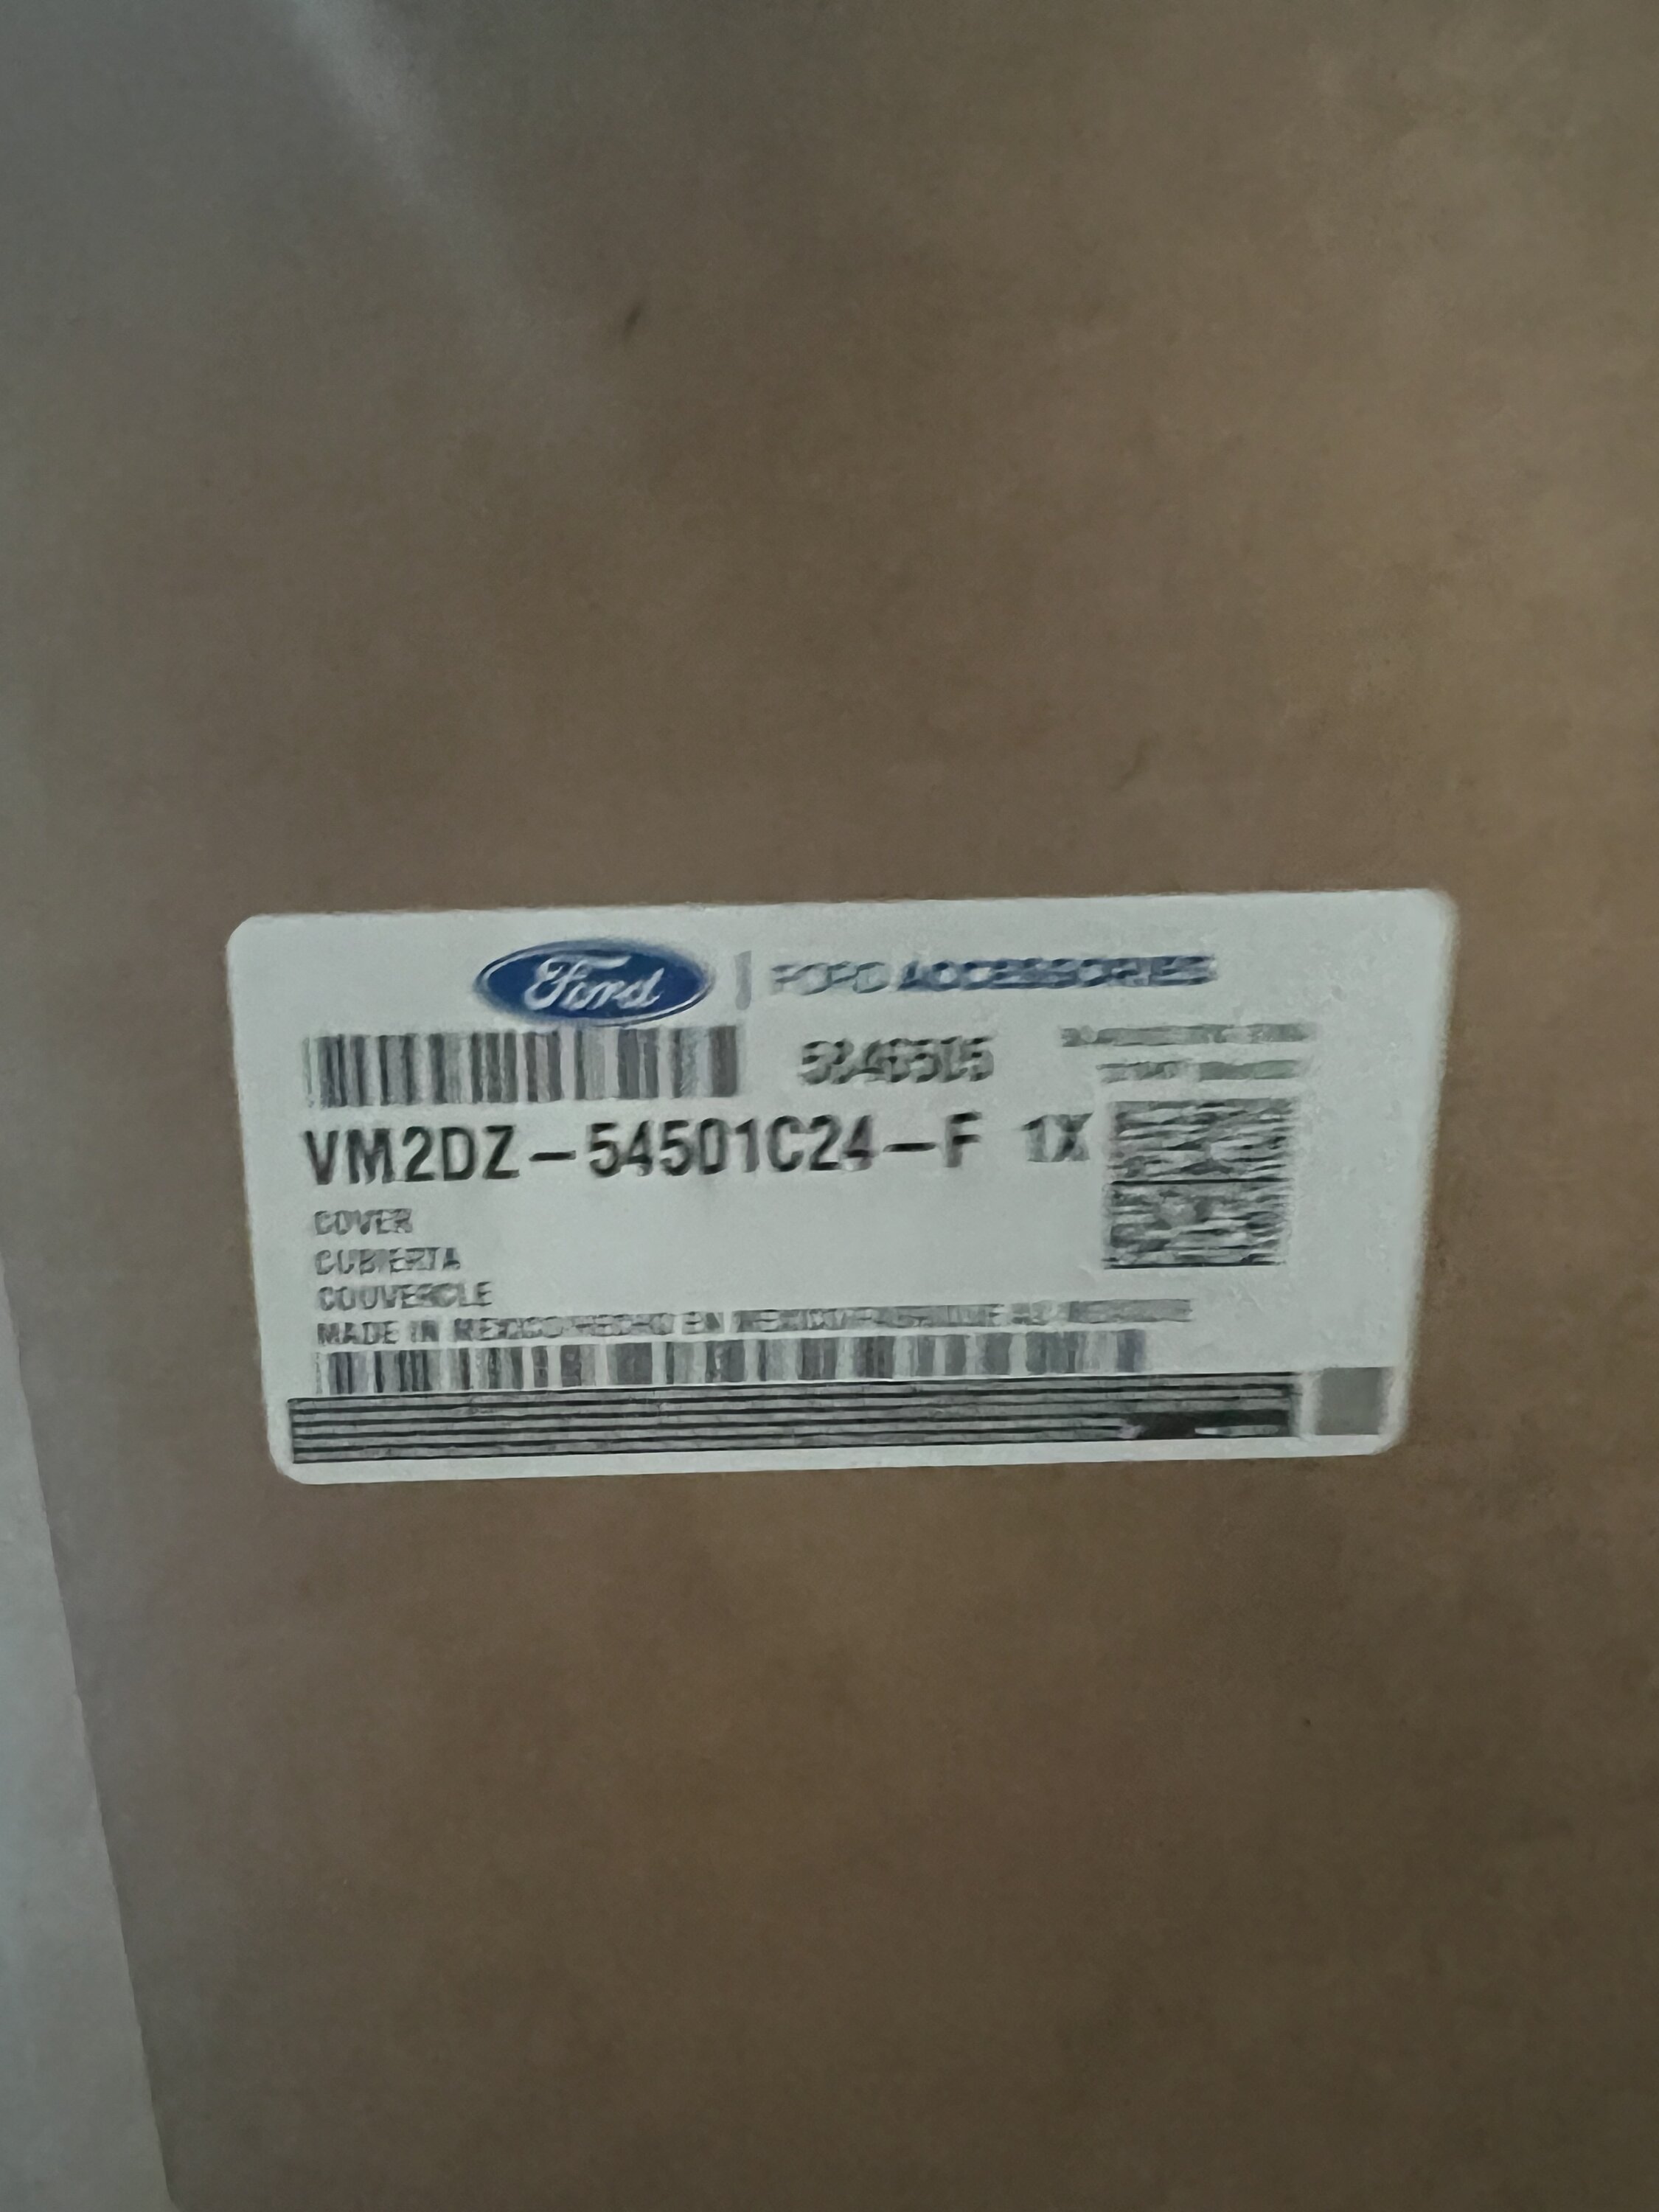 Ford Bronco 2 Door Factory soft top $1050 still in box E7BA7873-03D8-4819-BC9B-20D9BD6893E1